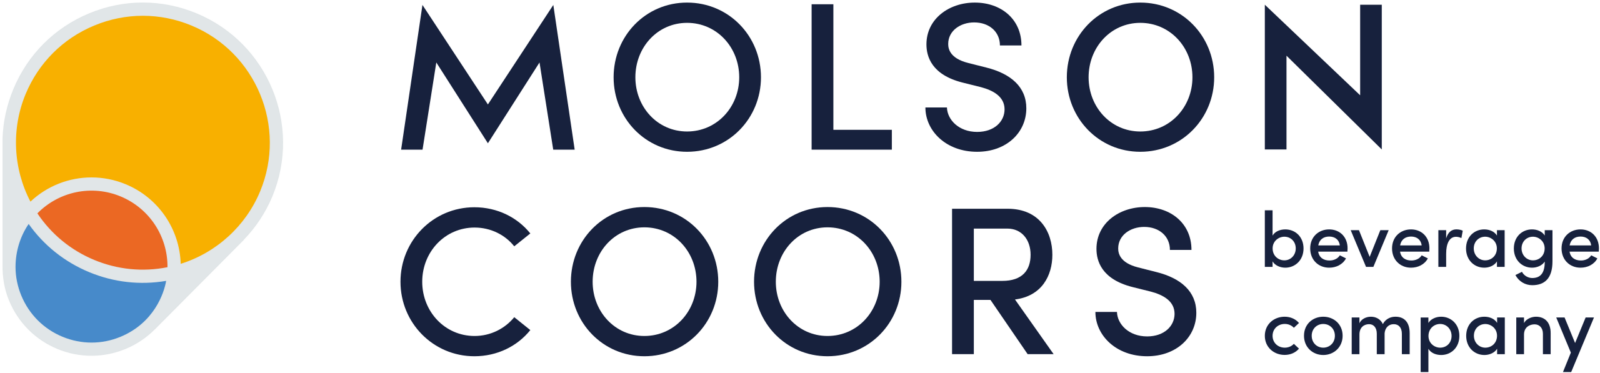 Molson Coors Beverage Company Logo Svg